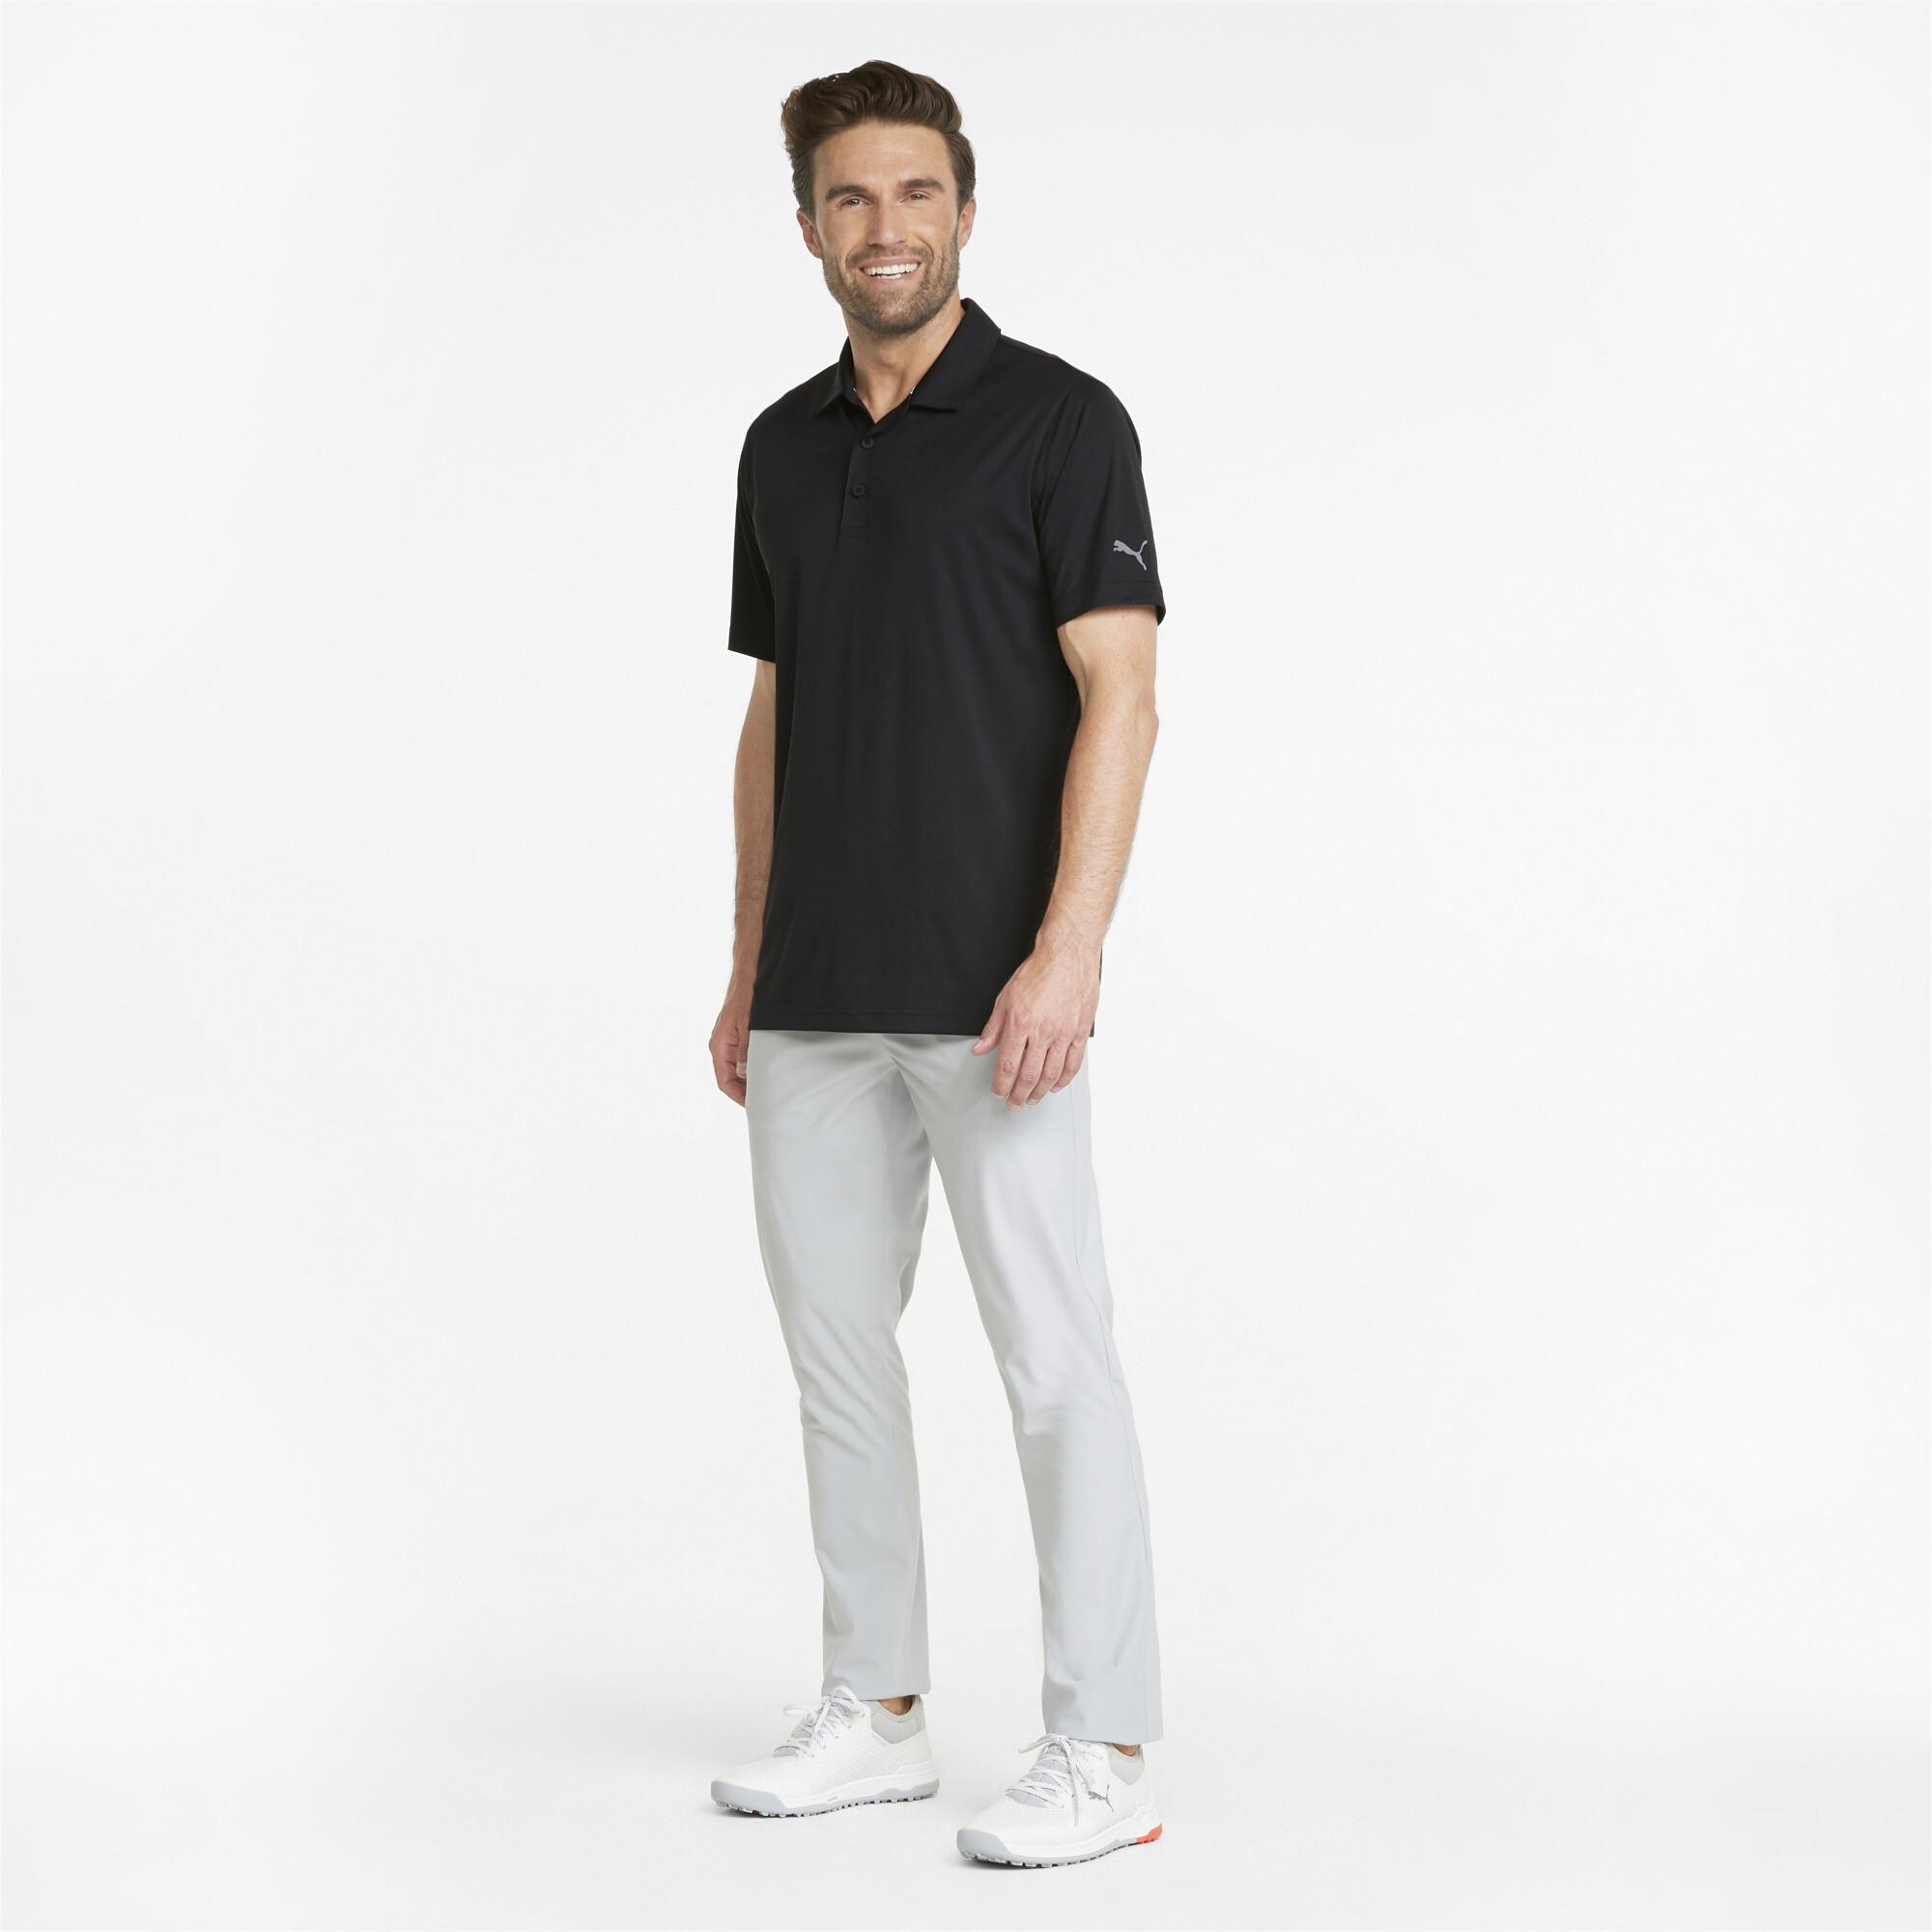 Men's Puma Gamer's Golf Polo Shirt T-Shirt, Black T-Shirt, Size 5XL T-Shirt, Clothing